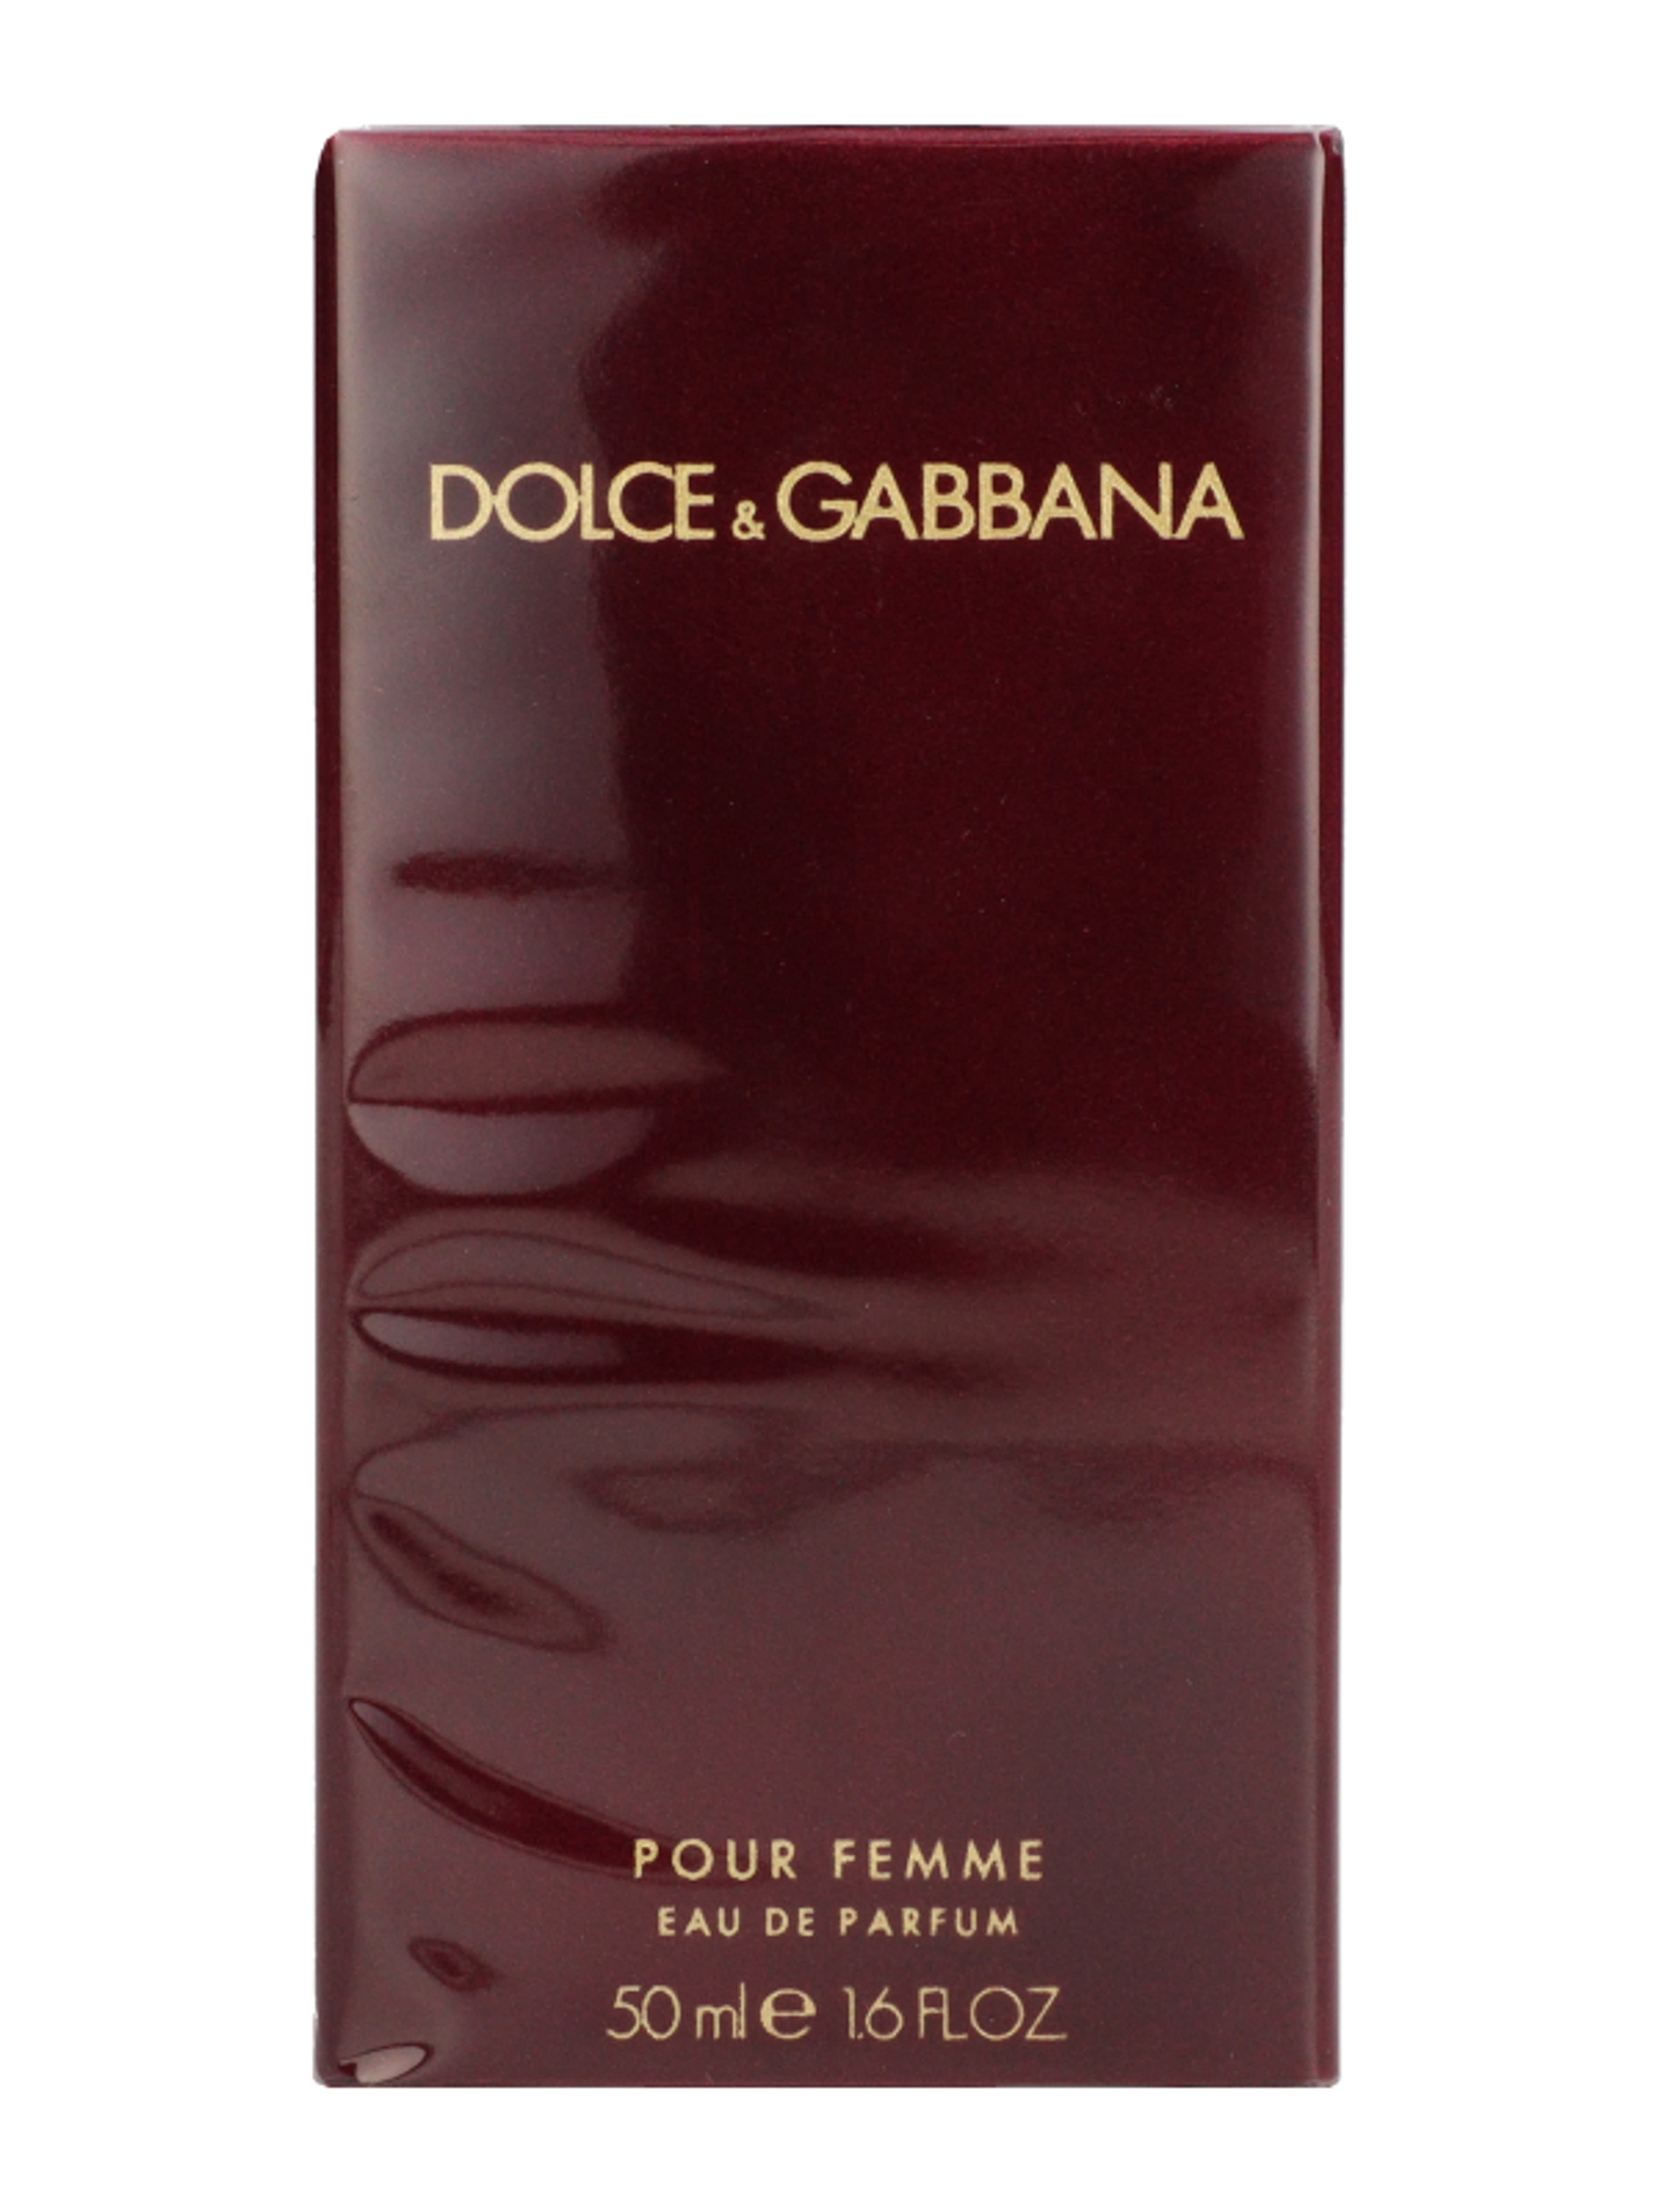 Dolce&Gabbana Pour Femme női eau de perfume - 50 ml